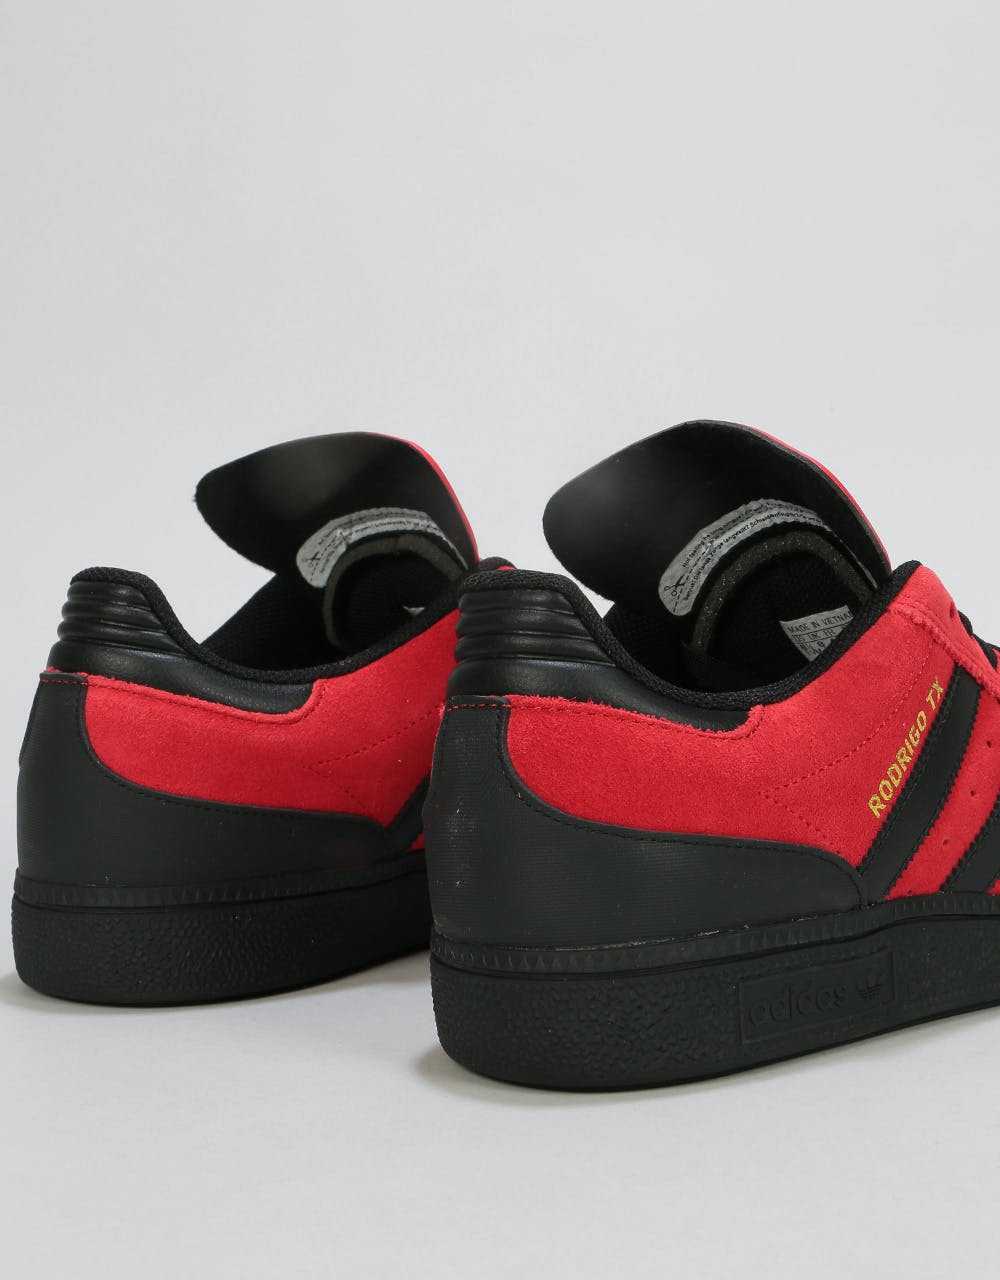 Adidas Busenitz Pro x Rodrigo Skate Shoes - Scarlet/Black/Gold